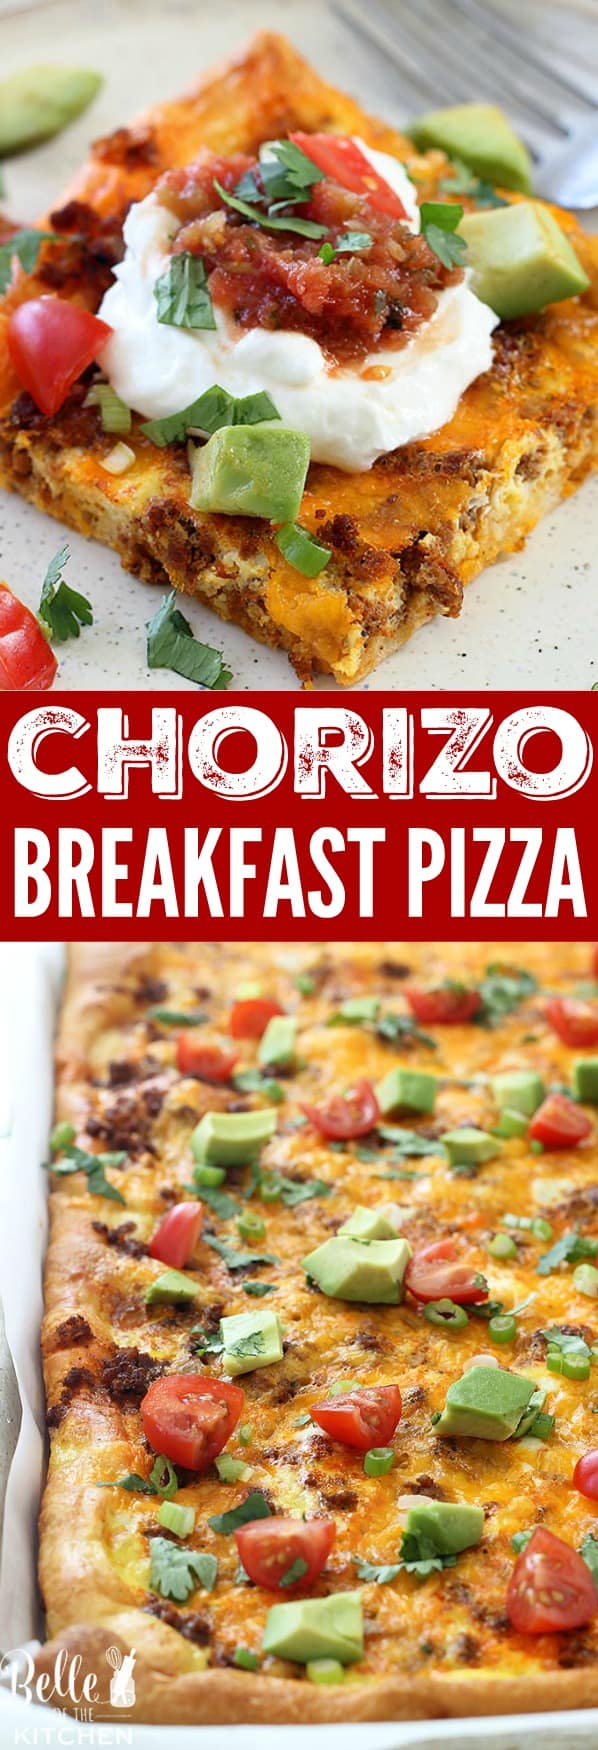 A slice of breakfast pizza with chorizo